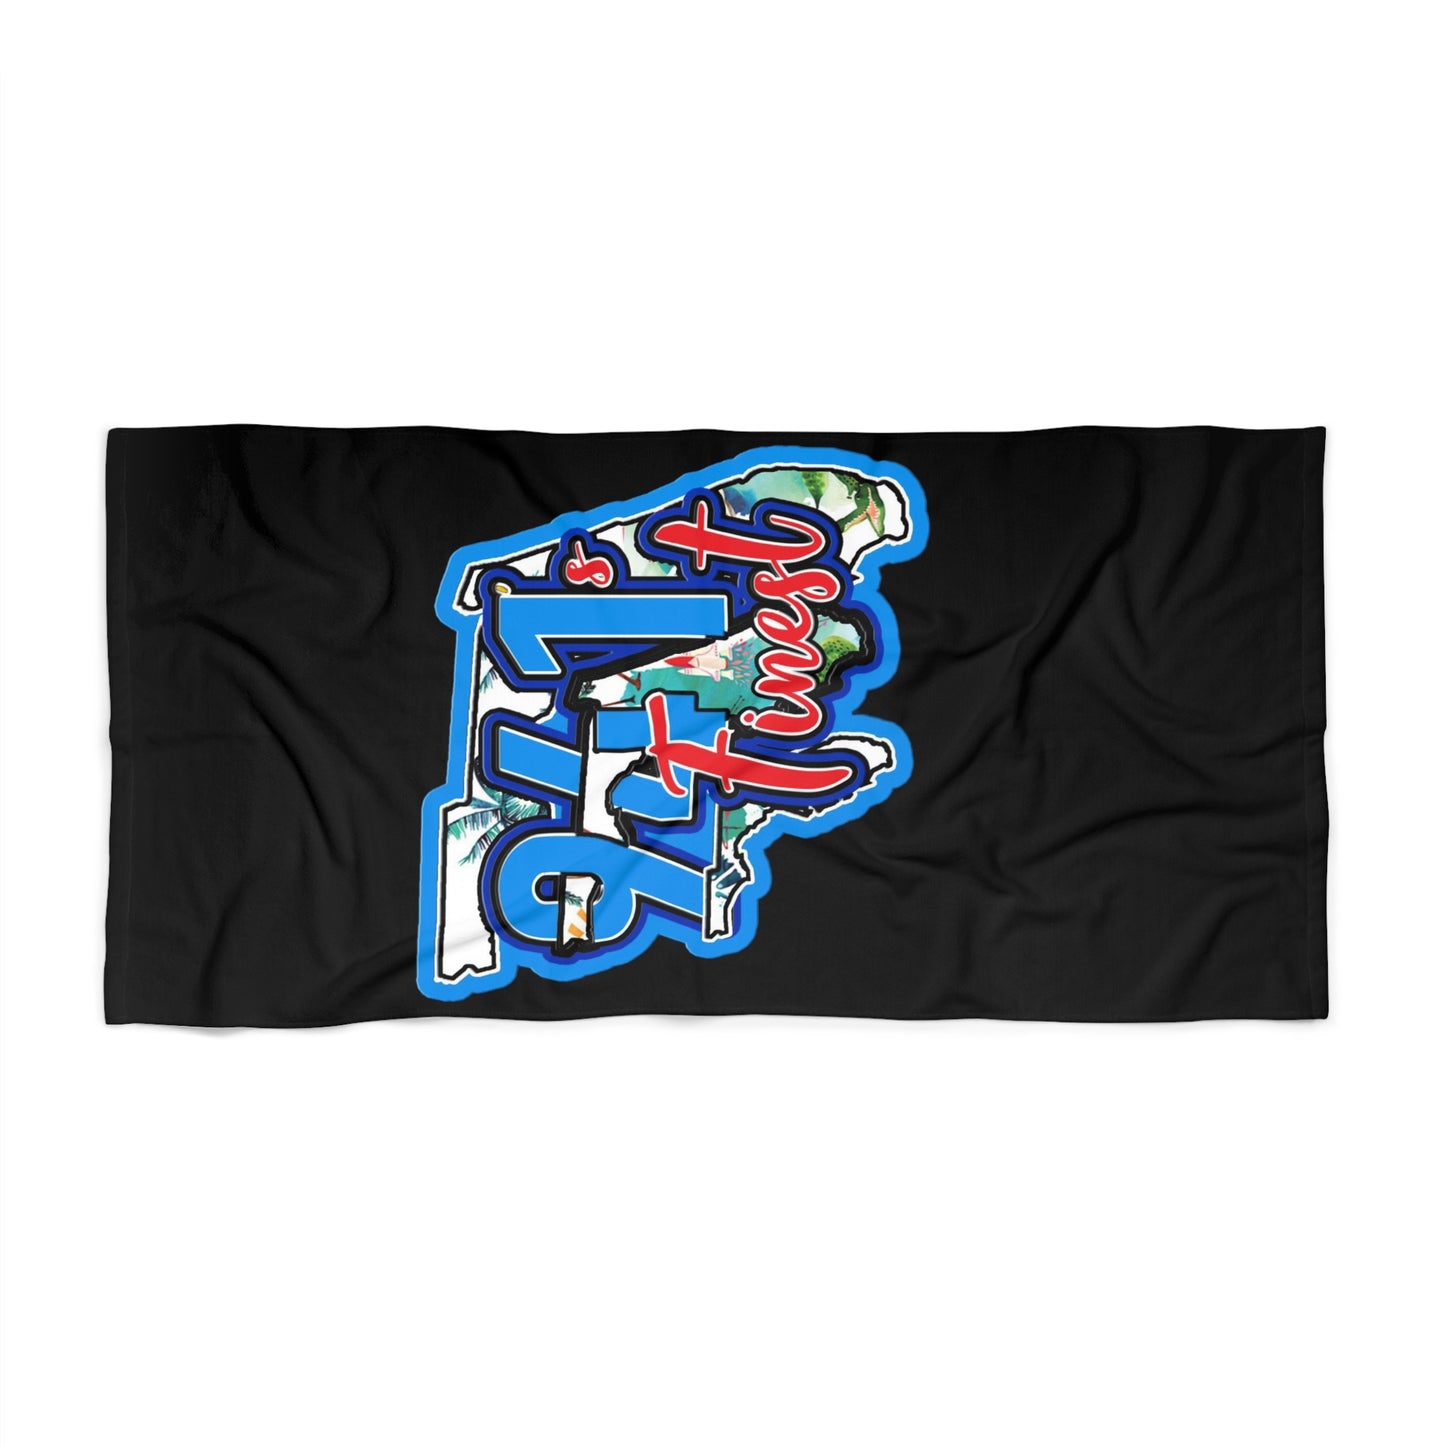 941’s Finest Beach Towel (Flag design)